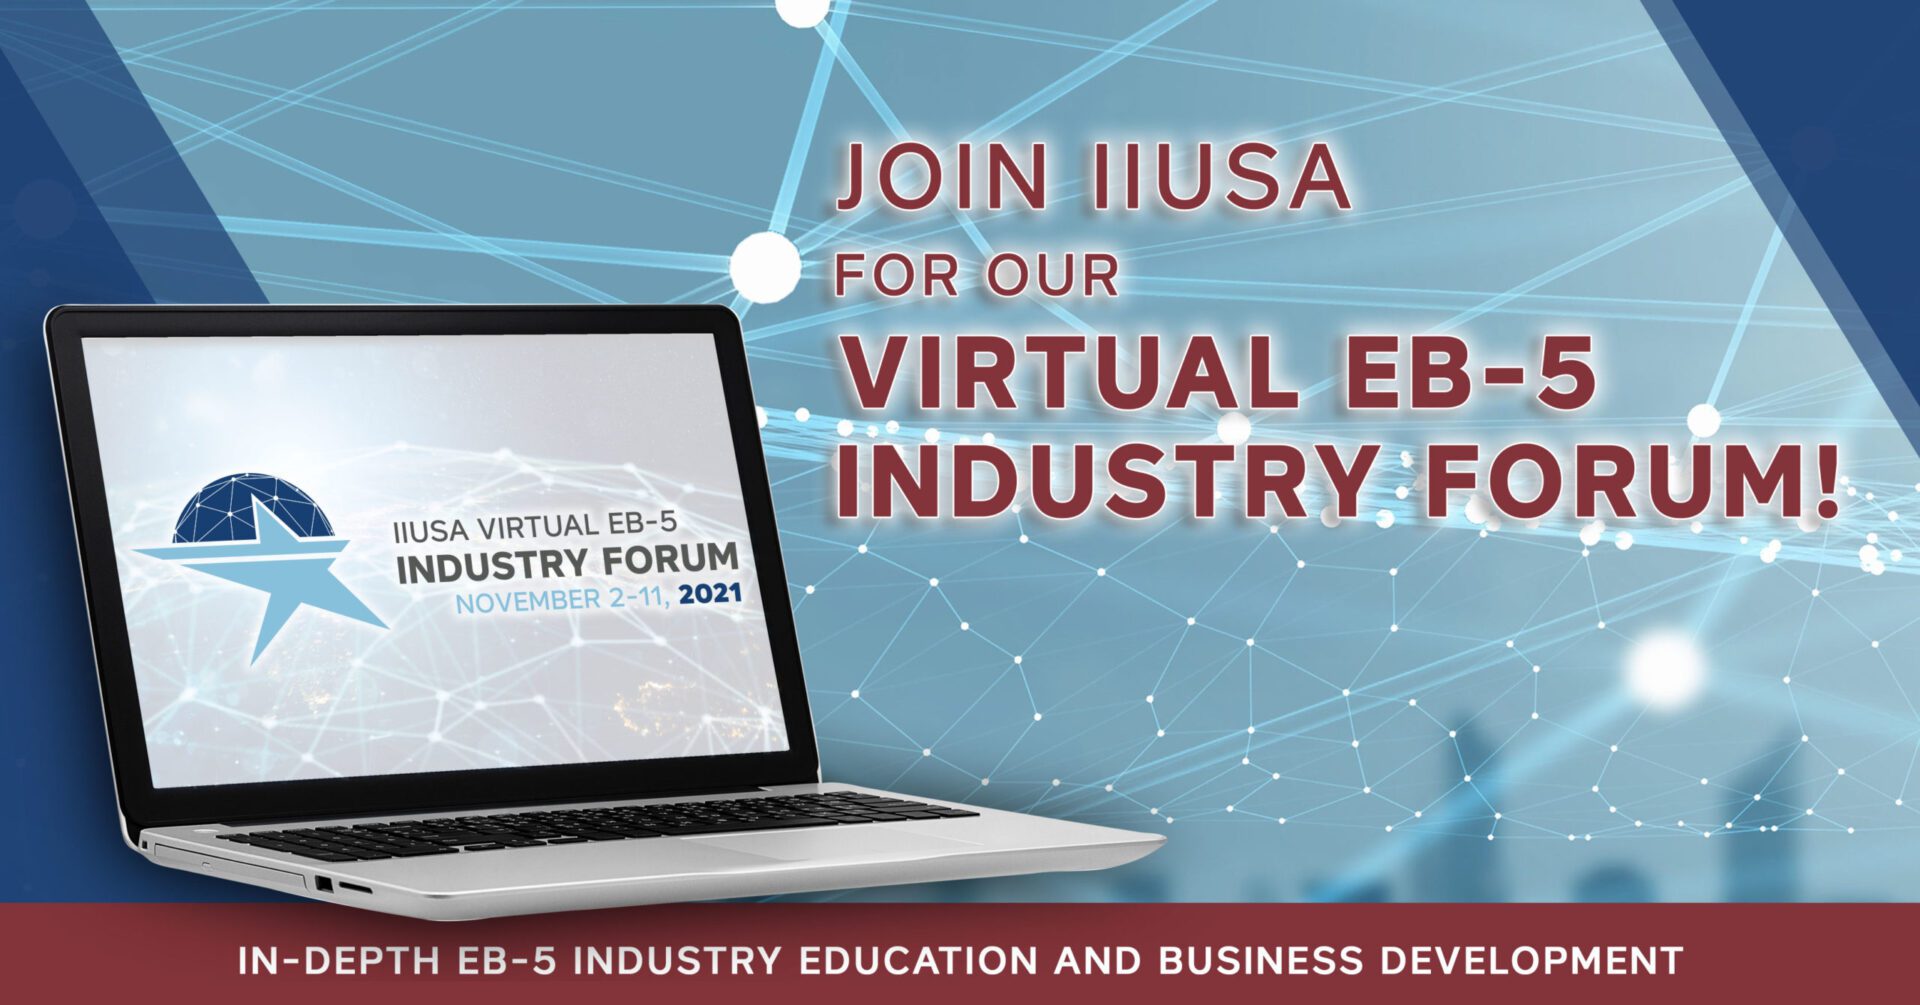 IIUSA EB-5 Industry Forum Starts Next Week – Last Chance to Register